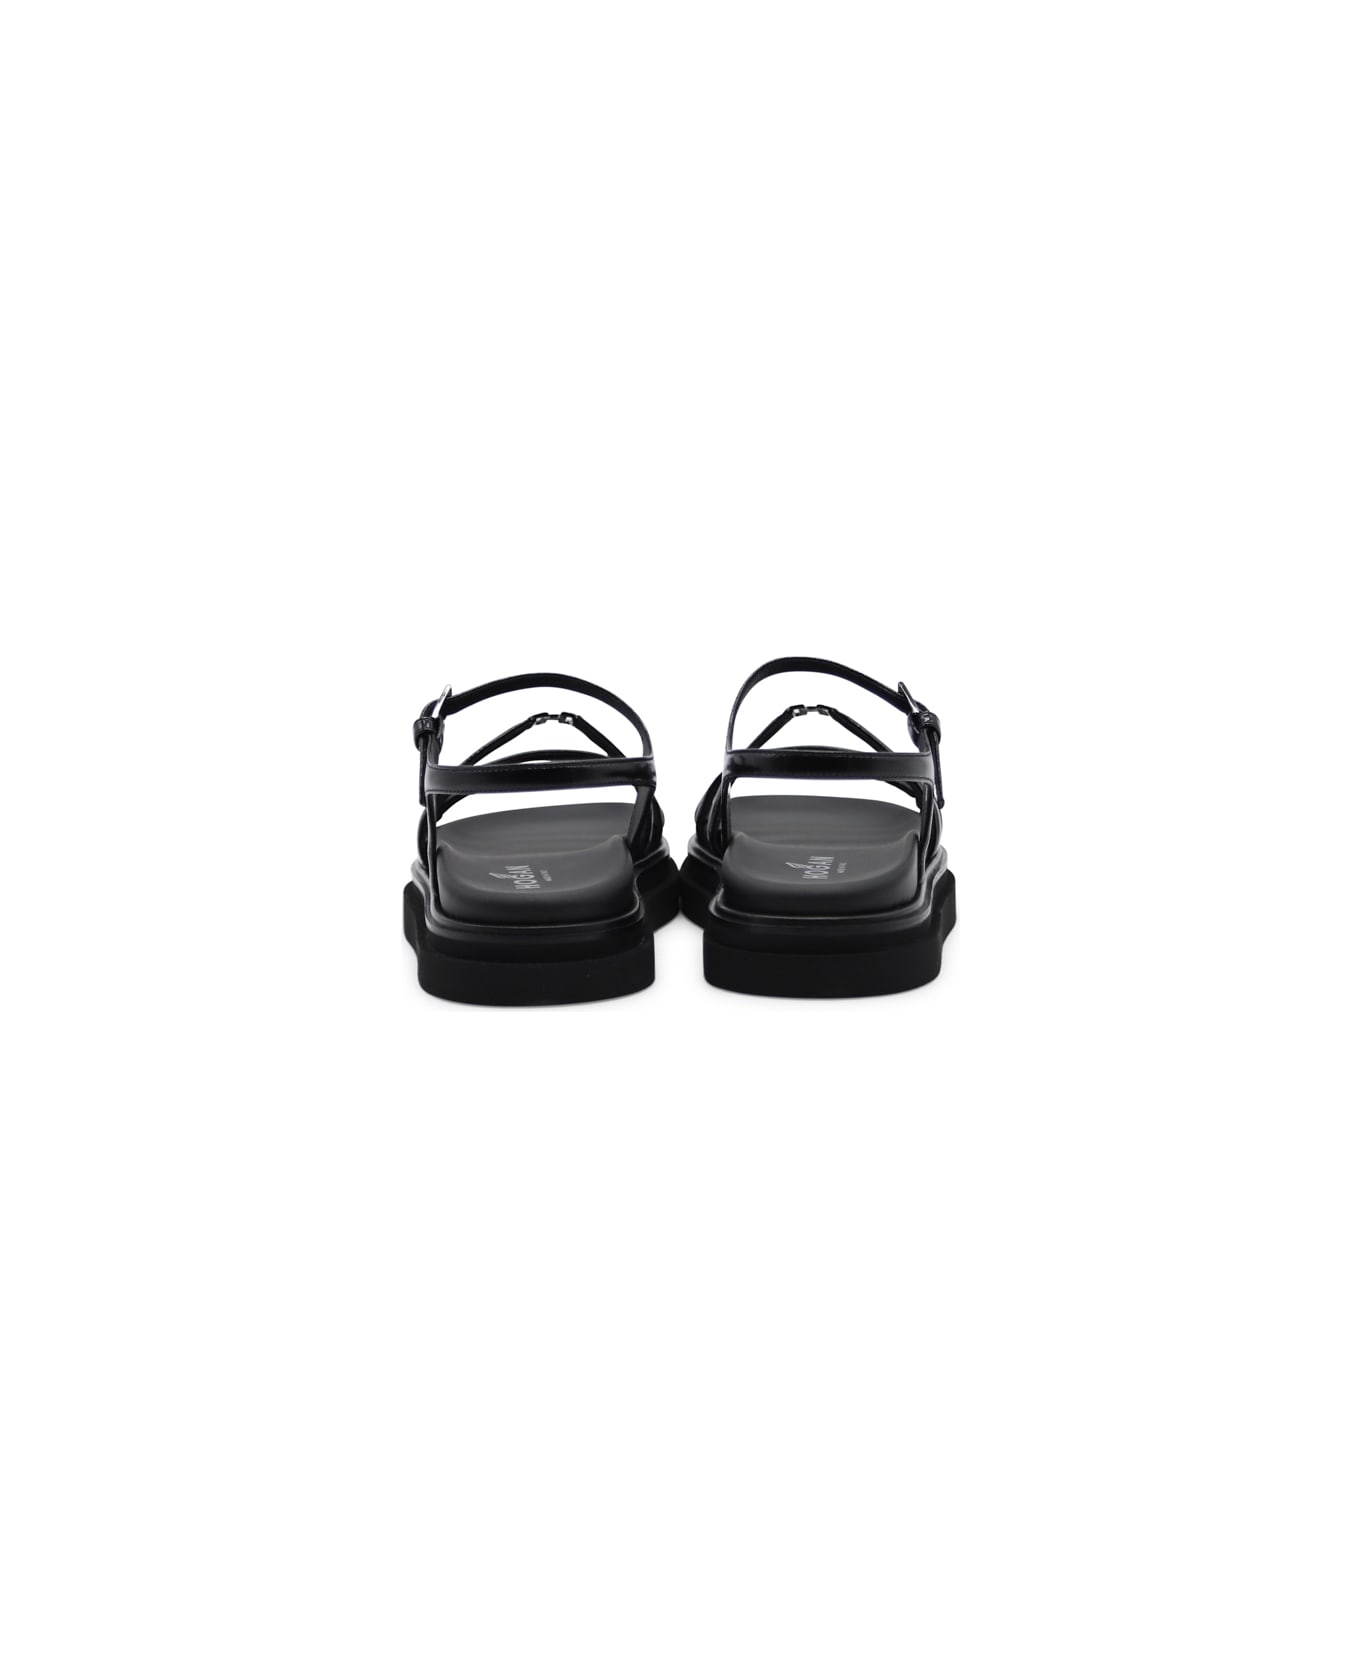 Hogan Patent Leather Sandals - Black